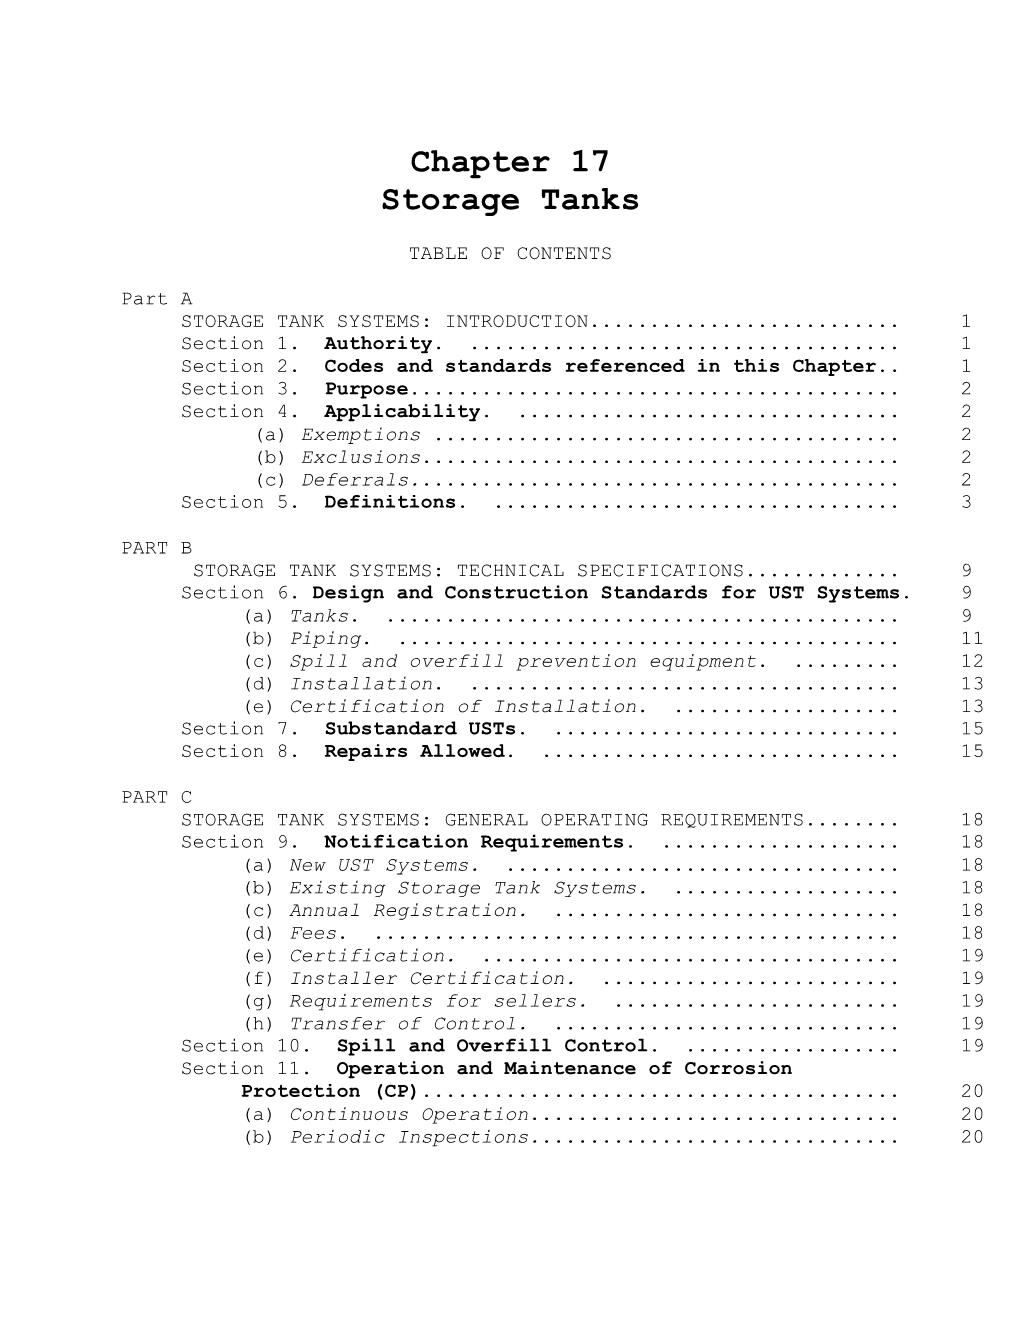 Chapter 17 Storage Tanks